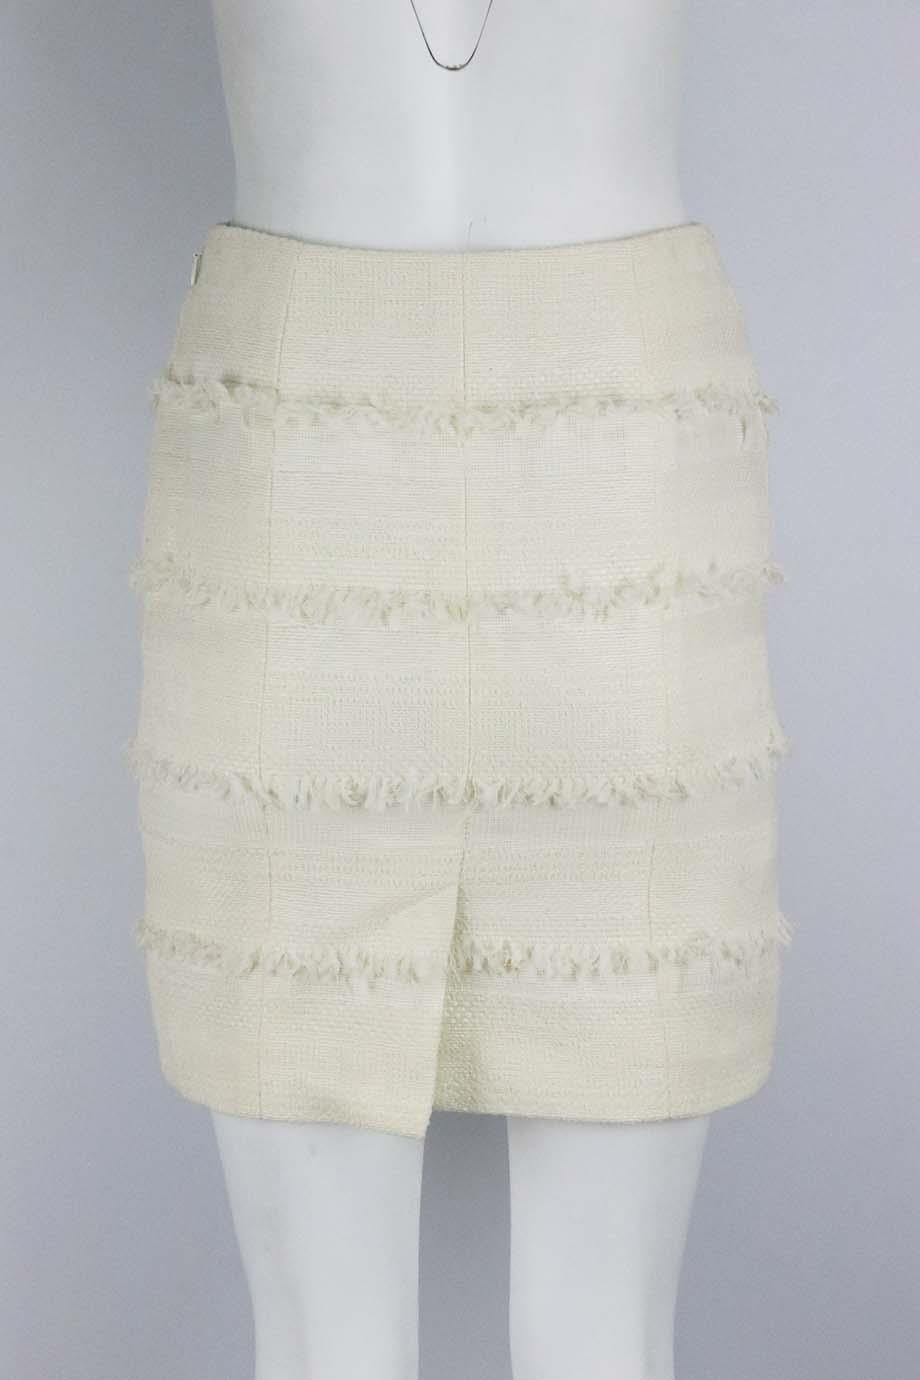 Gray Chanel Cotton Blend Tweed Mini Skirt FR 34 UK 6 